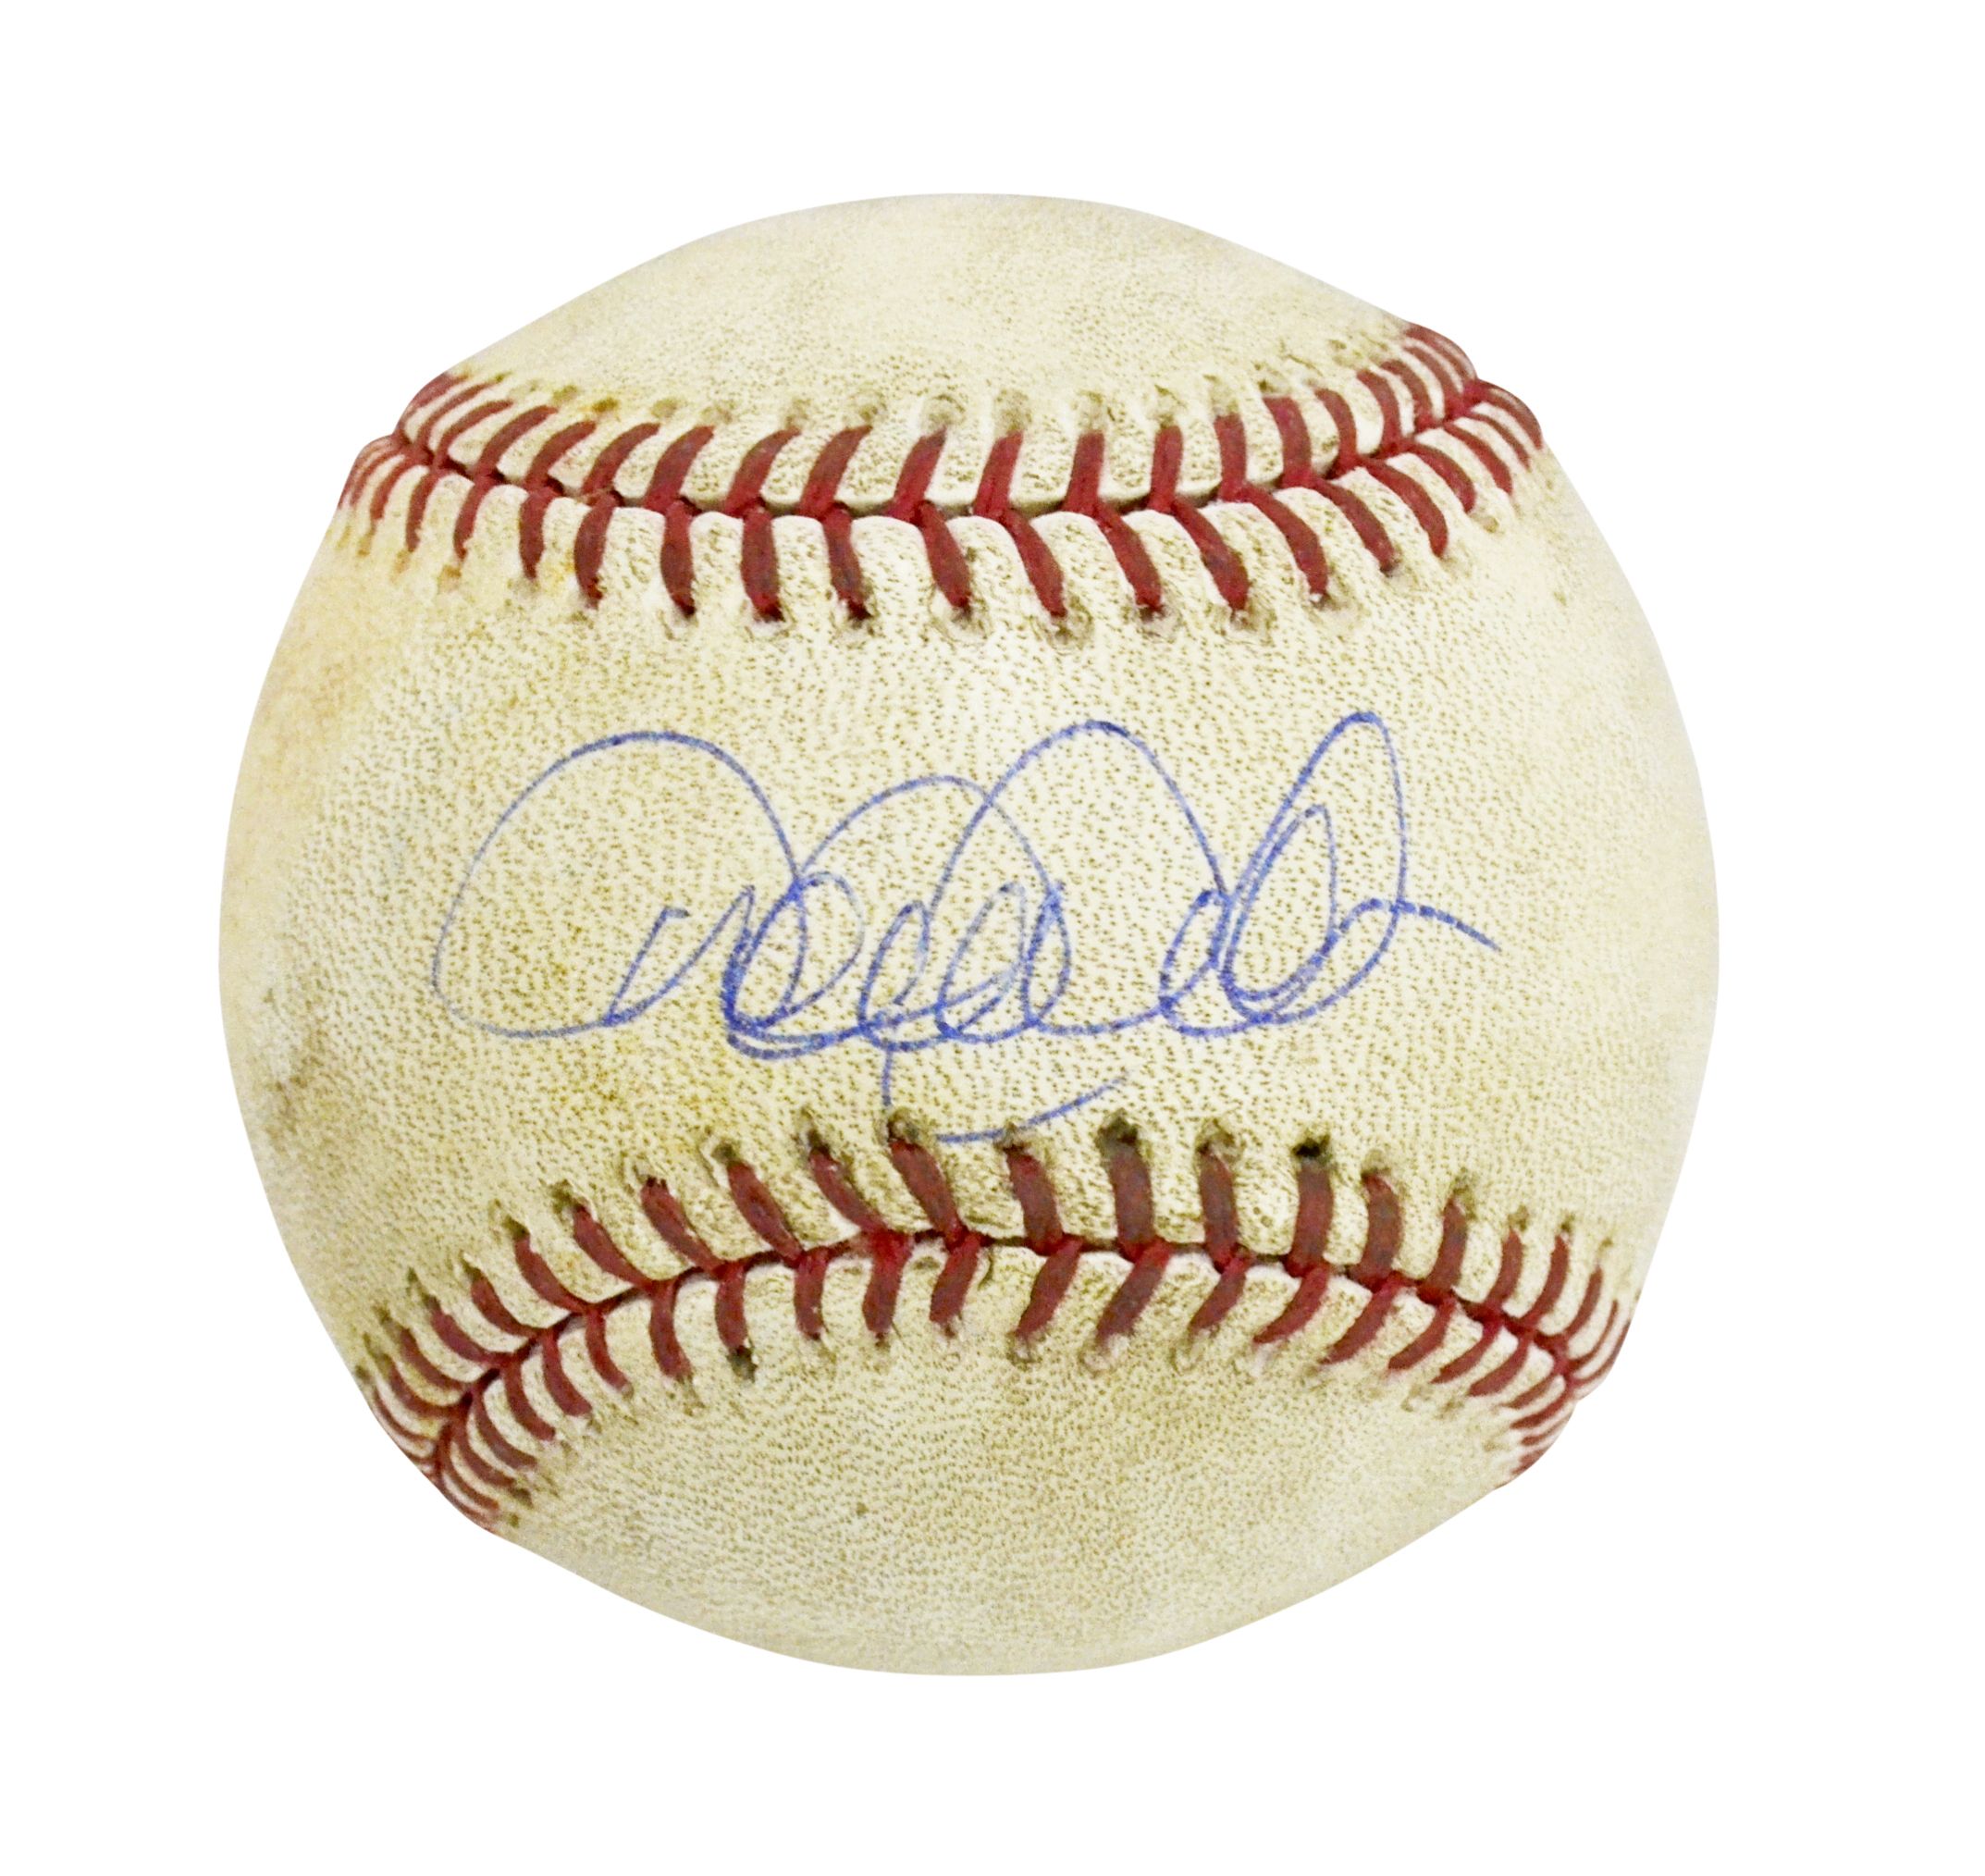 Lot Detail - Derek Jeter Signed Game Used Baseball (MLB Authenticated)2146 x 2028